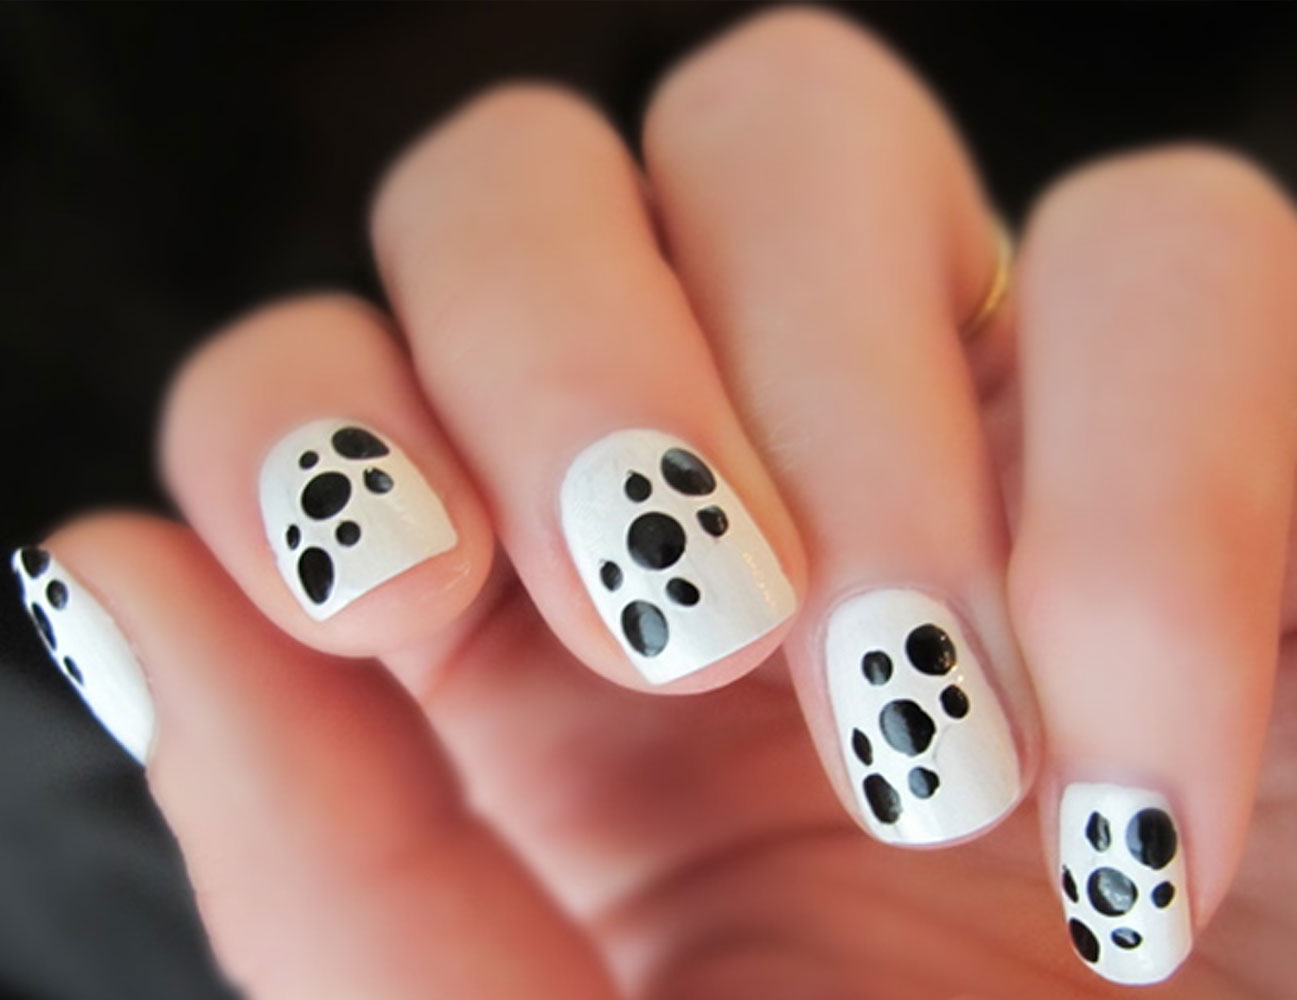 White Nails With Black Polka Dots Nail Art Idea